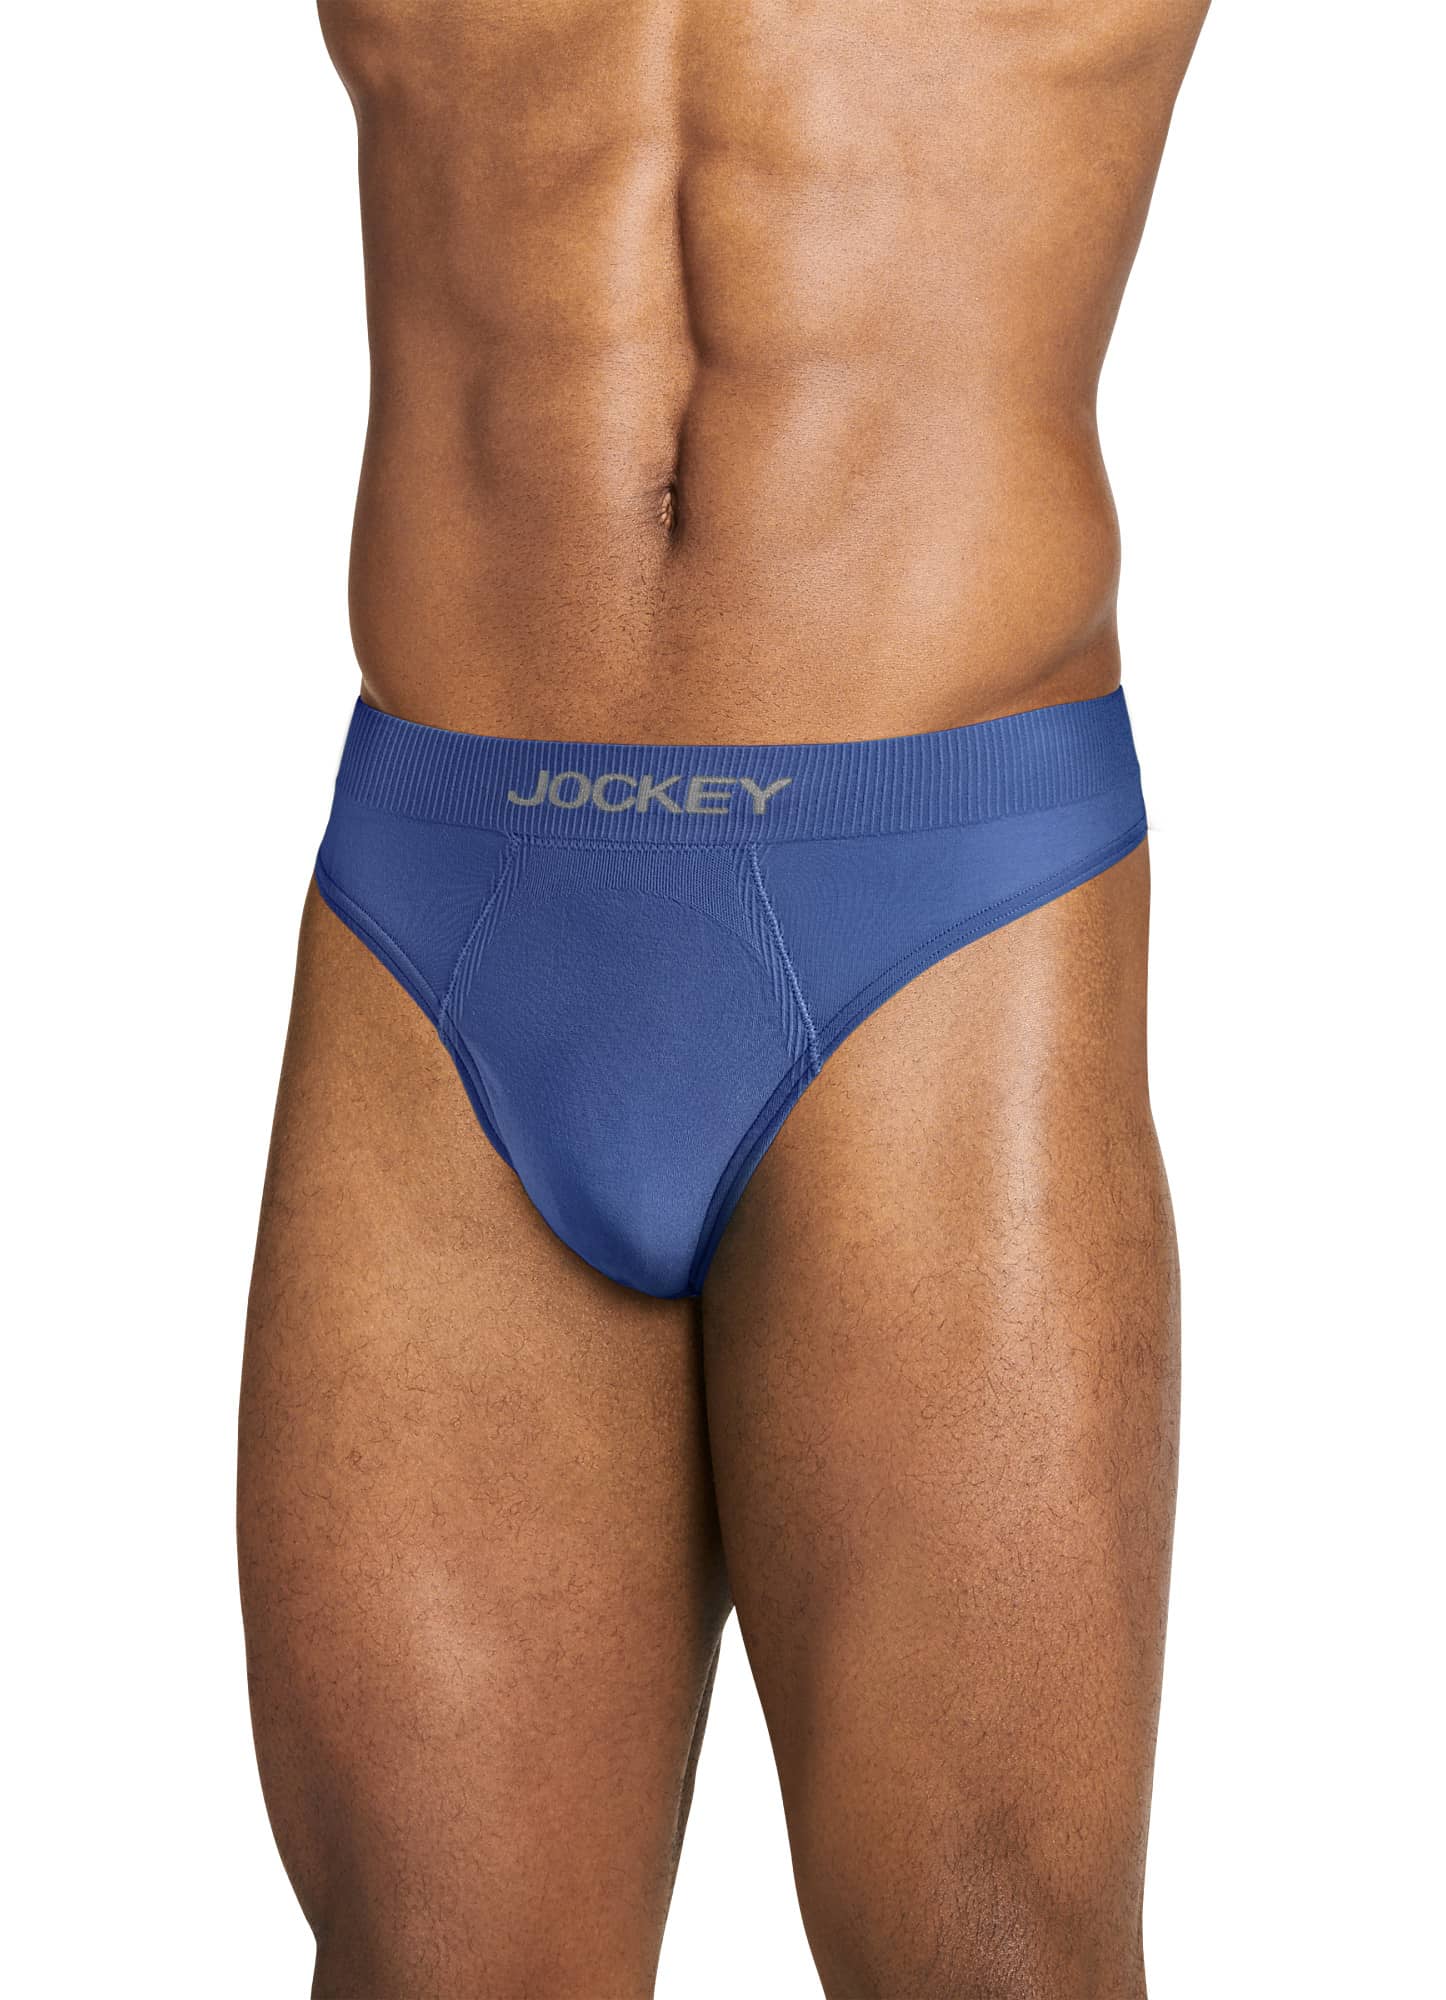 Jockey mens Preto formfit modal seamfree thong underwear tamanho S M